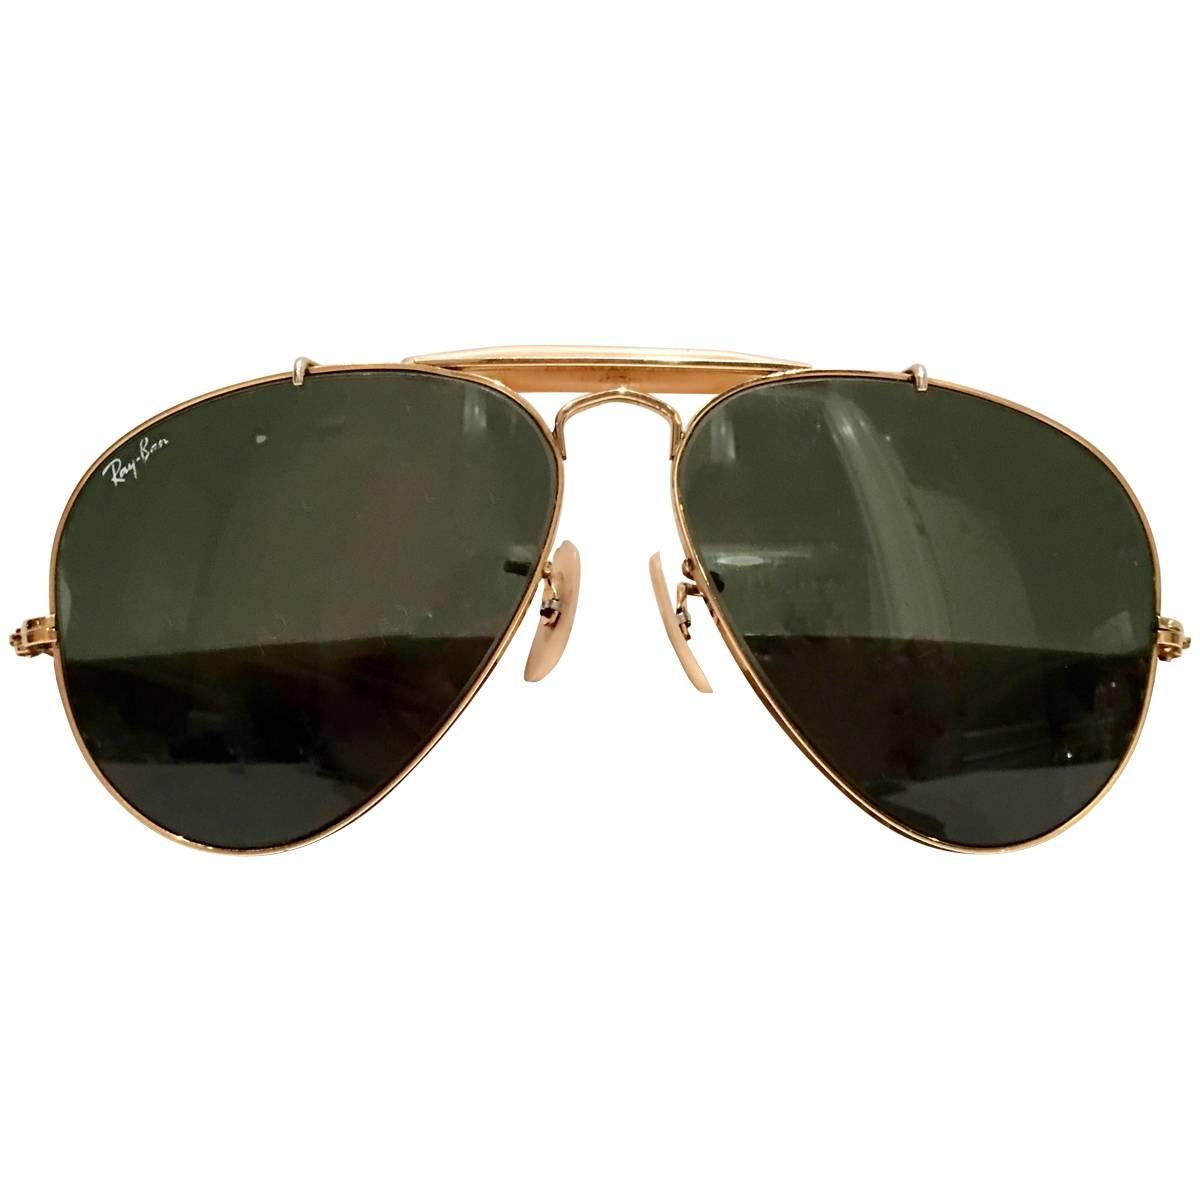 1960s Ray Ban Classic Pilot's Aviator Gold Plate Sunglasses